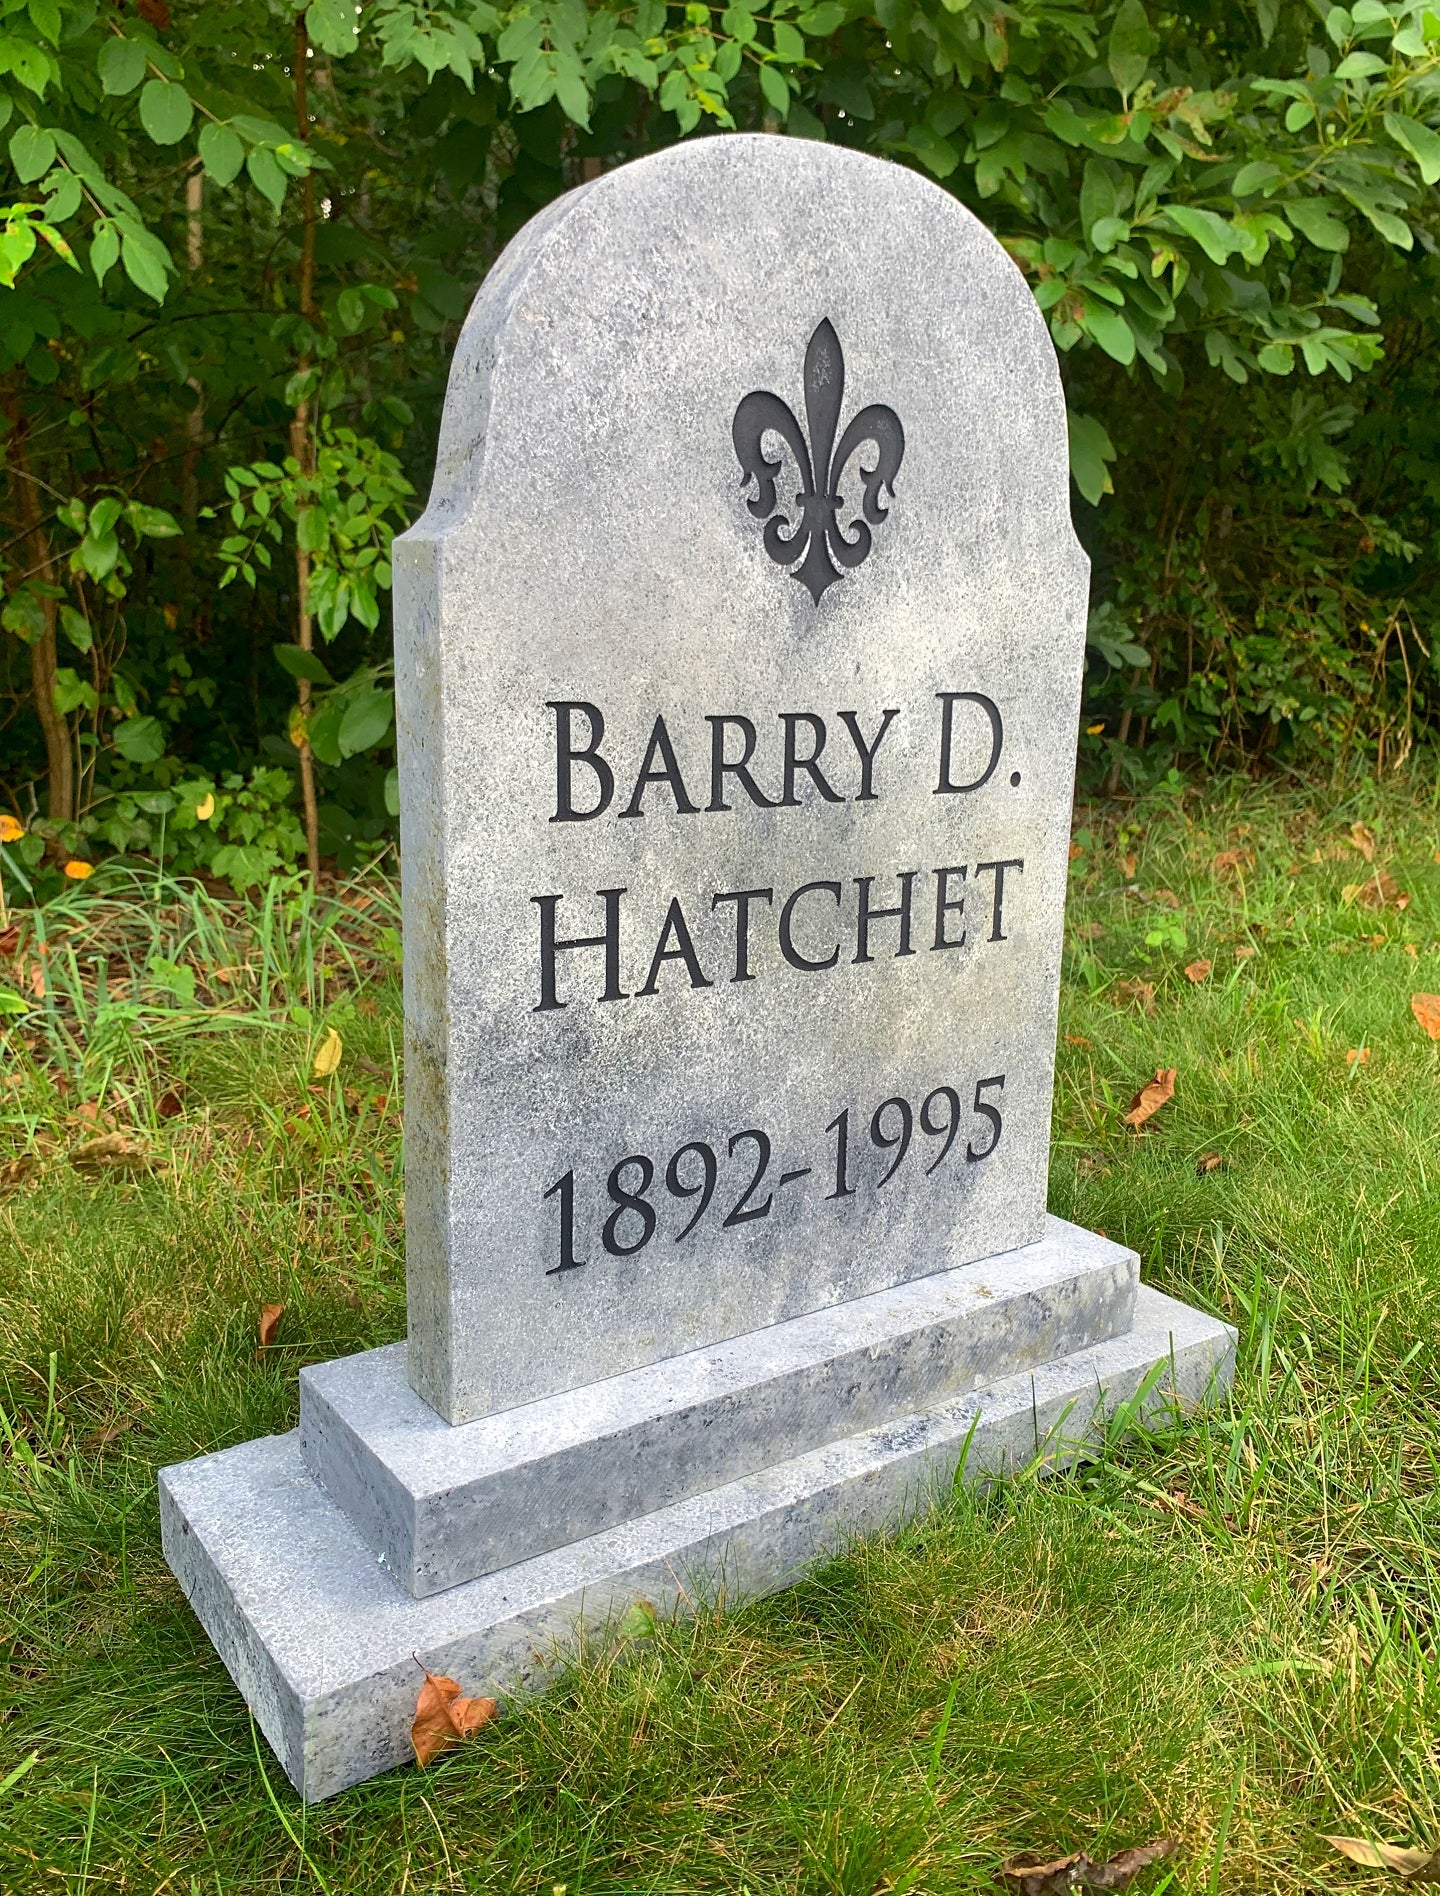 Barry D. Hatchet Comical Tombstone